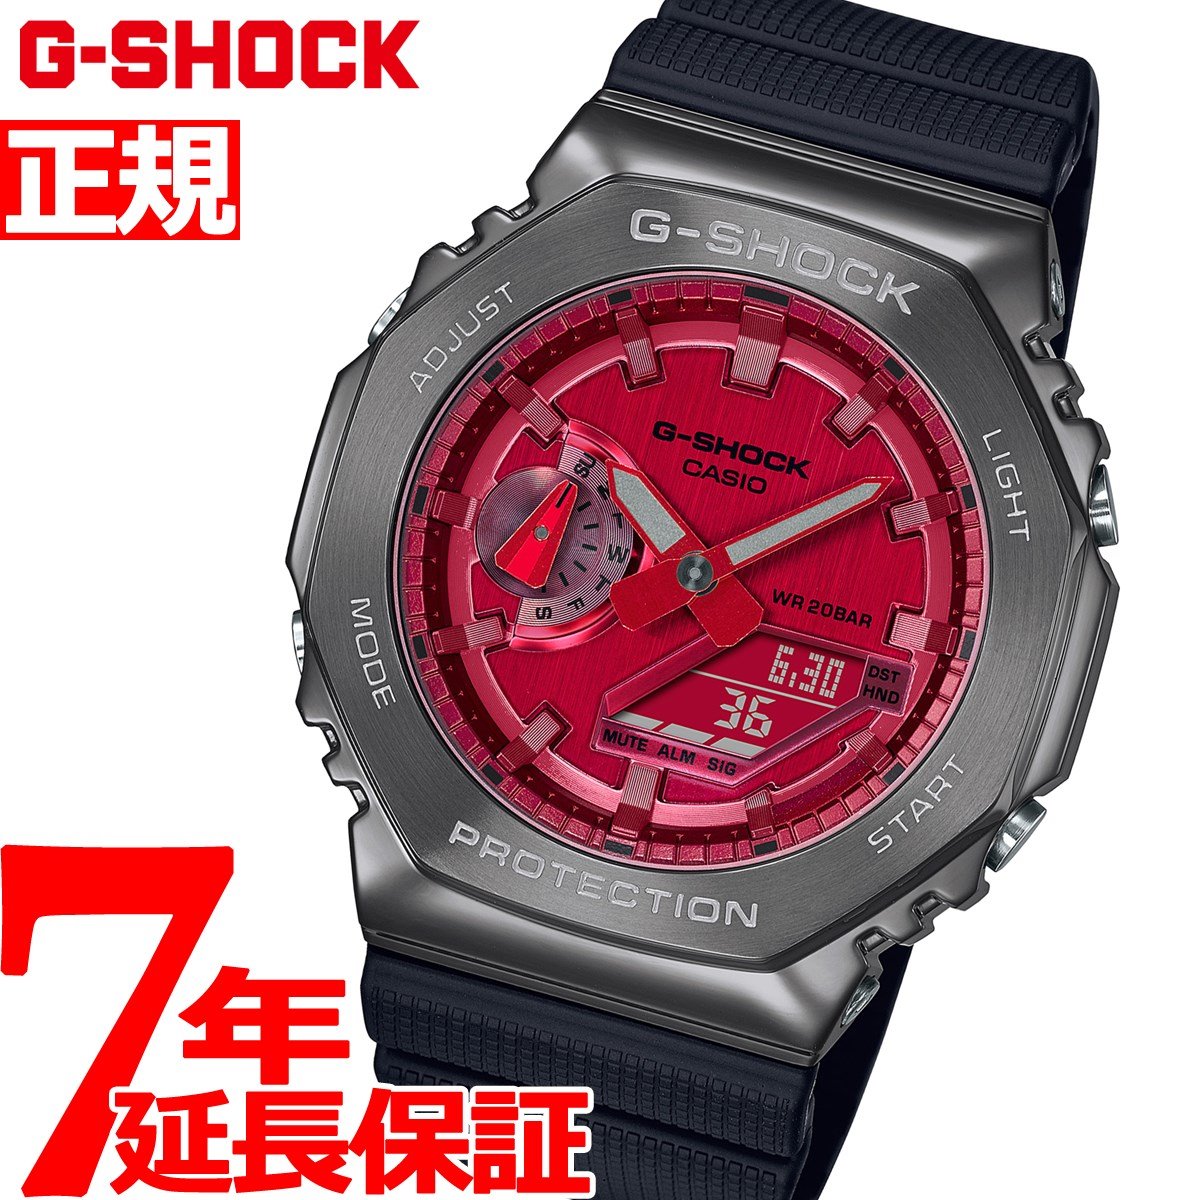 G-SHOCK Gショック メタル カシオ CASIO 限定モデル 赤 腕時計 メンズ